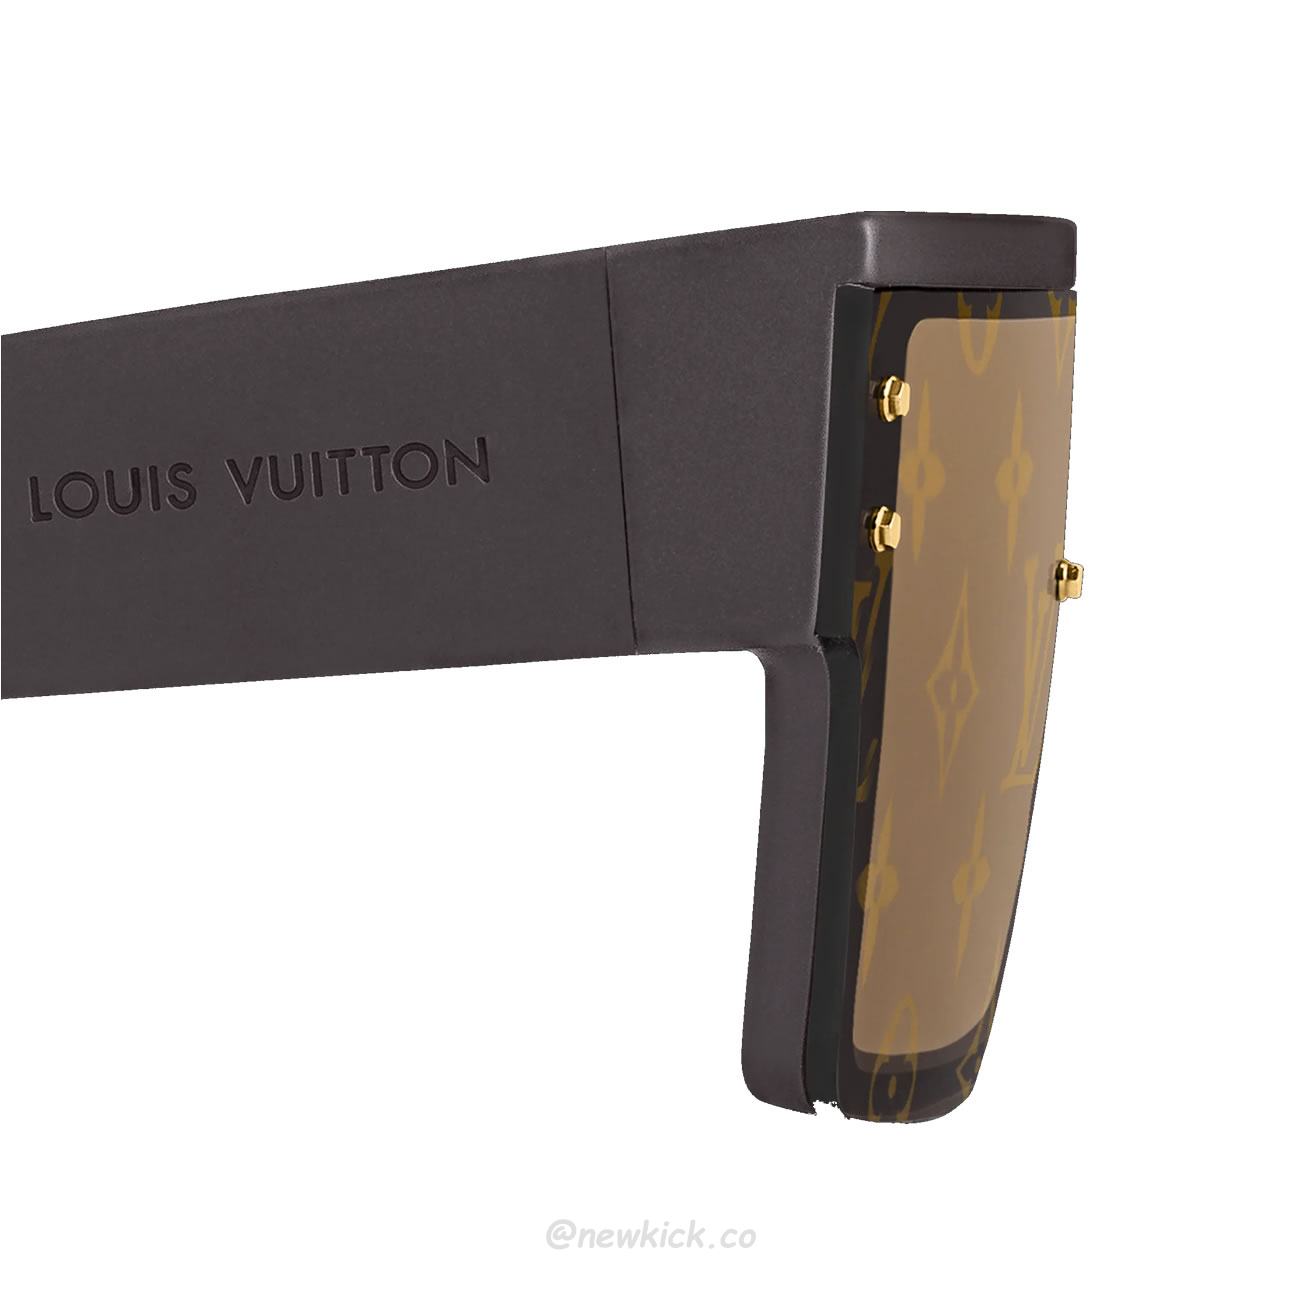 Louis Vuitton Lv Waimea Sunglasses (19) - newkick.org